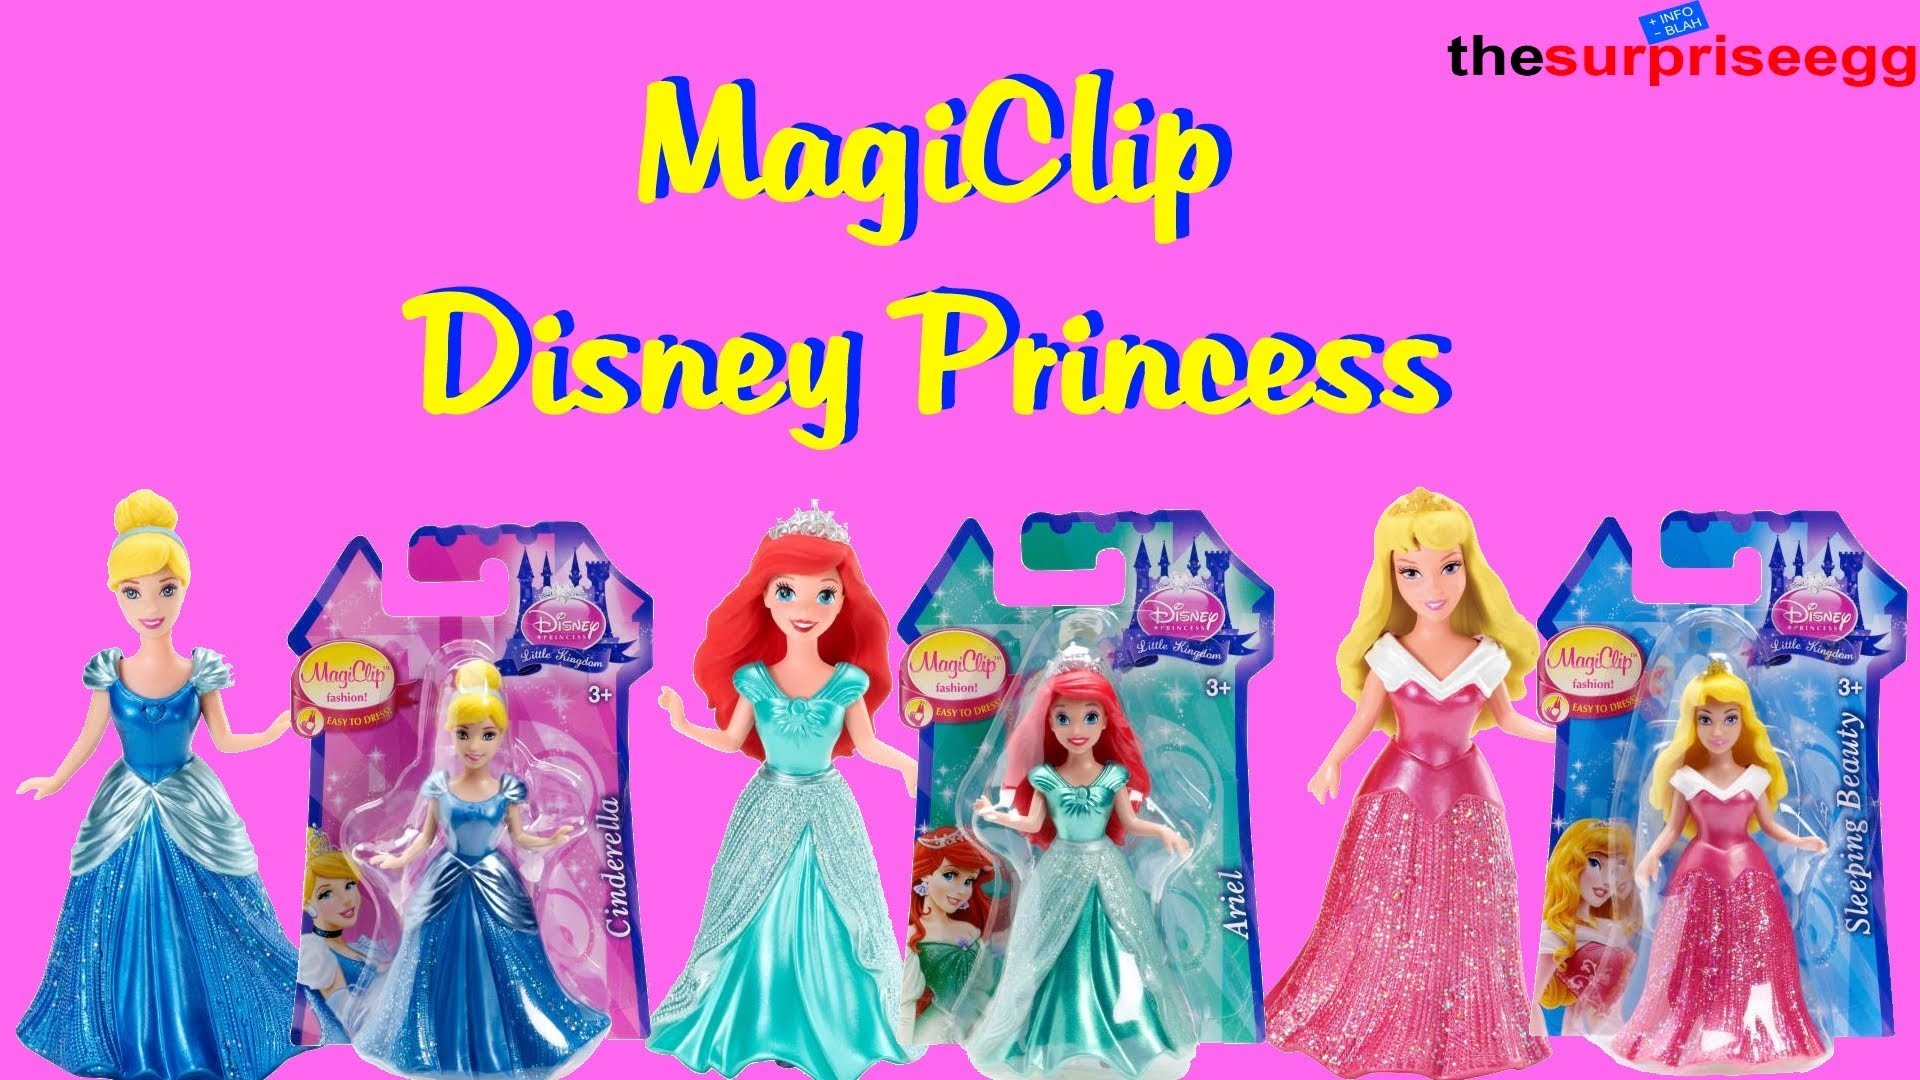 1920x1080 Disney Princess MagiClip mini Dolls Figures Ariel, Cinderella, Sleeping  Beauty opening unboxing - YouTube